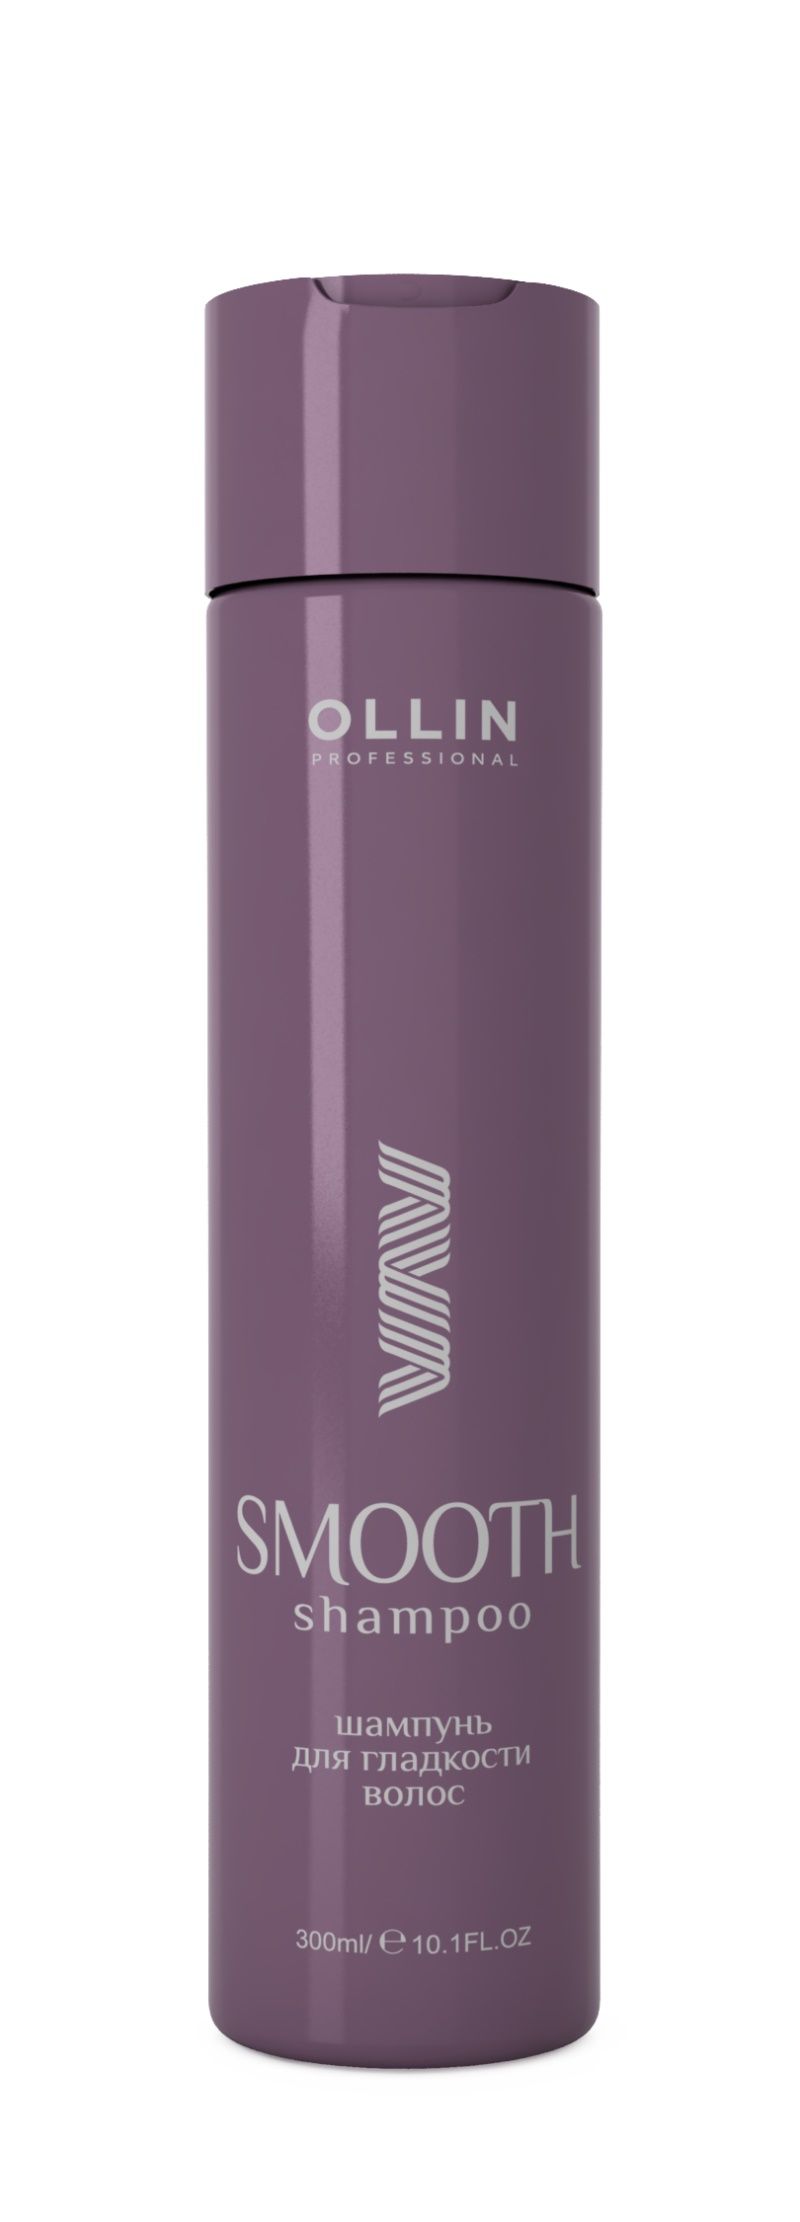 Ollin, Шампунь для гладкости волос серии «Smooth Hair», Фото интернет-магазин Премиум-Косметика.РФ